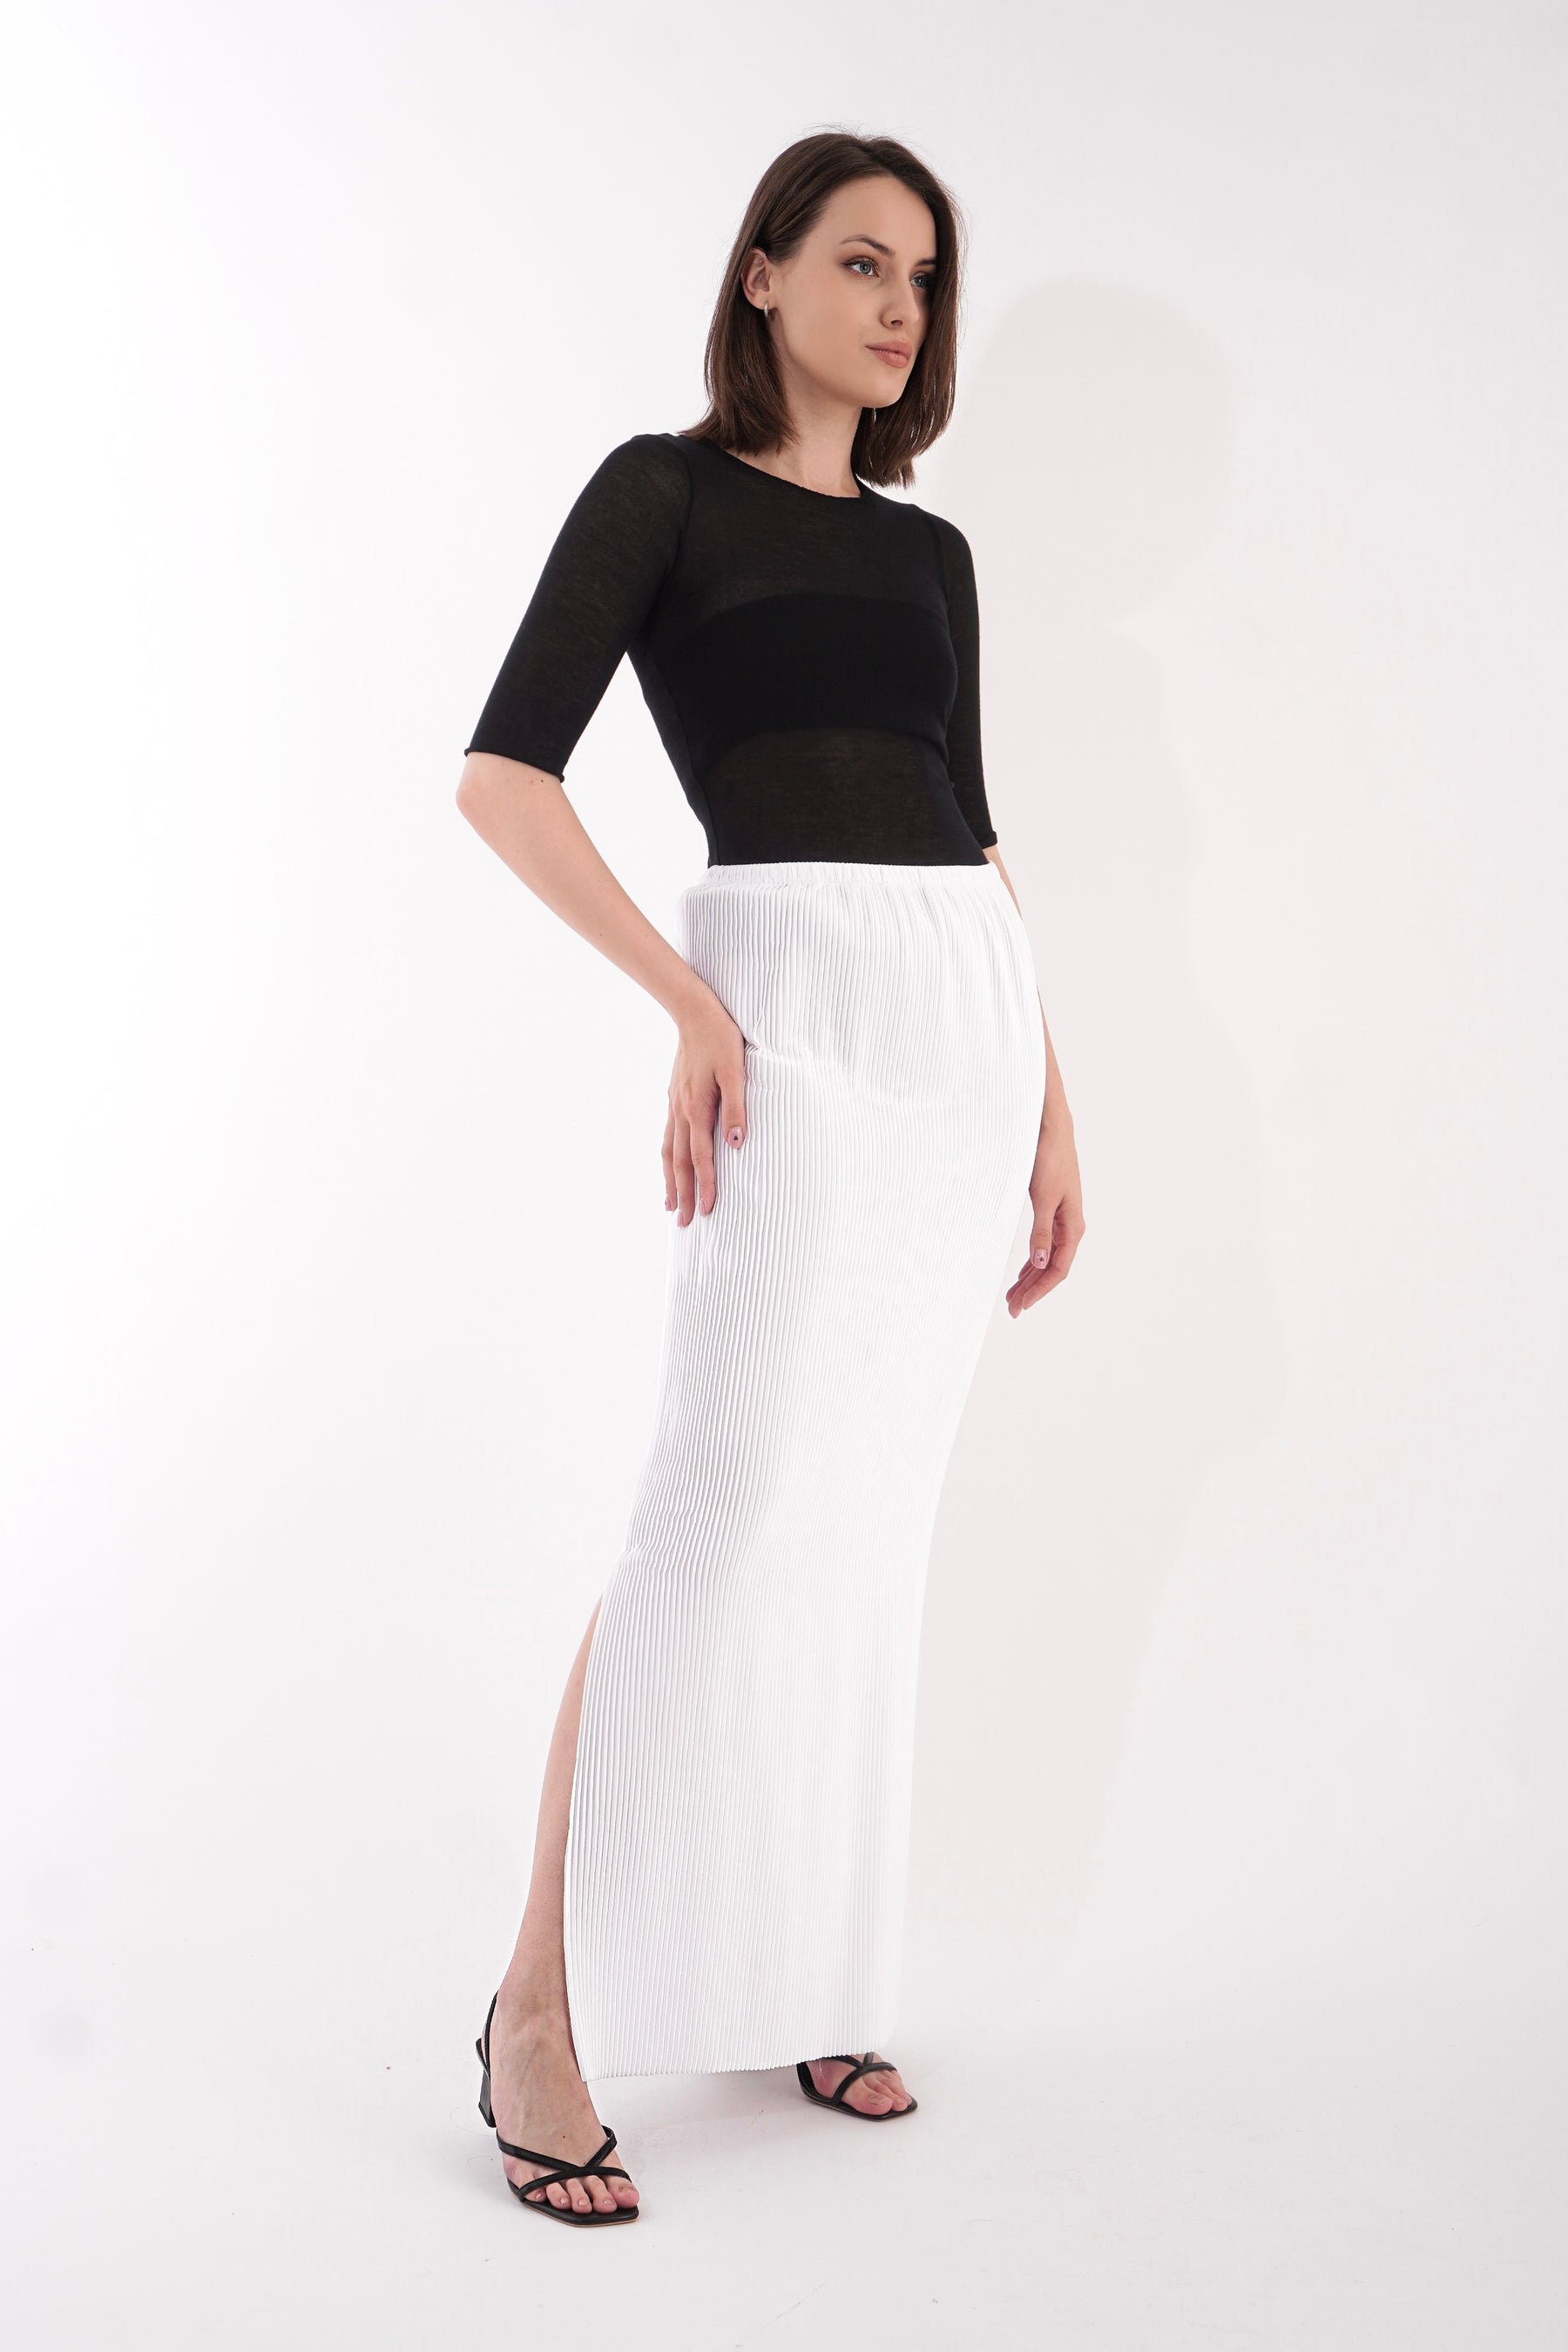 Miracle Plisse Skirt White